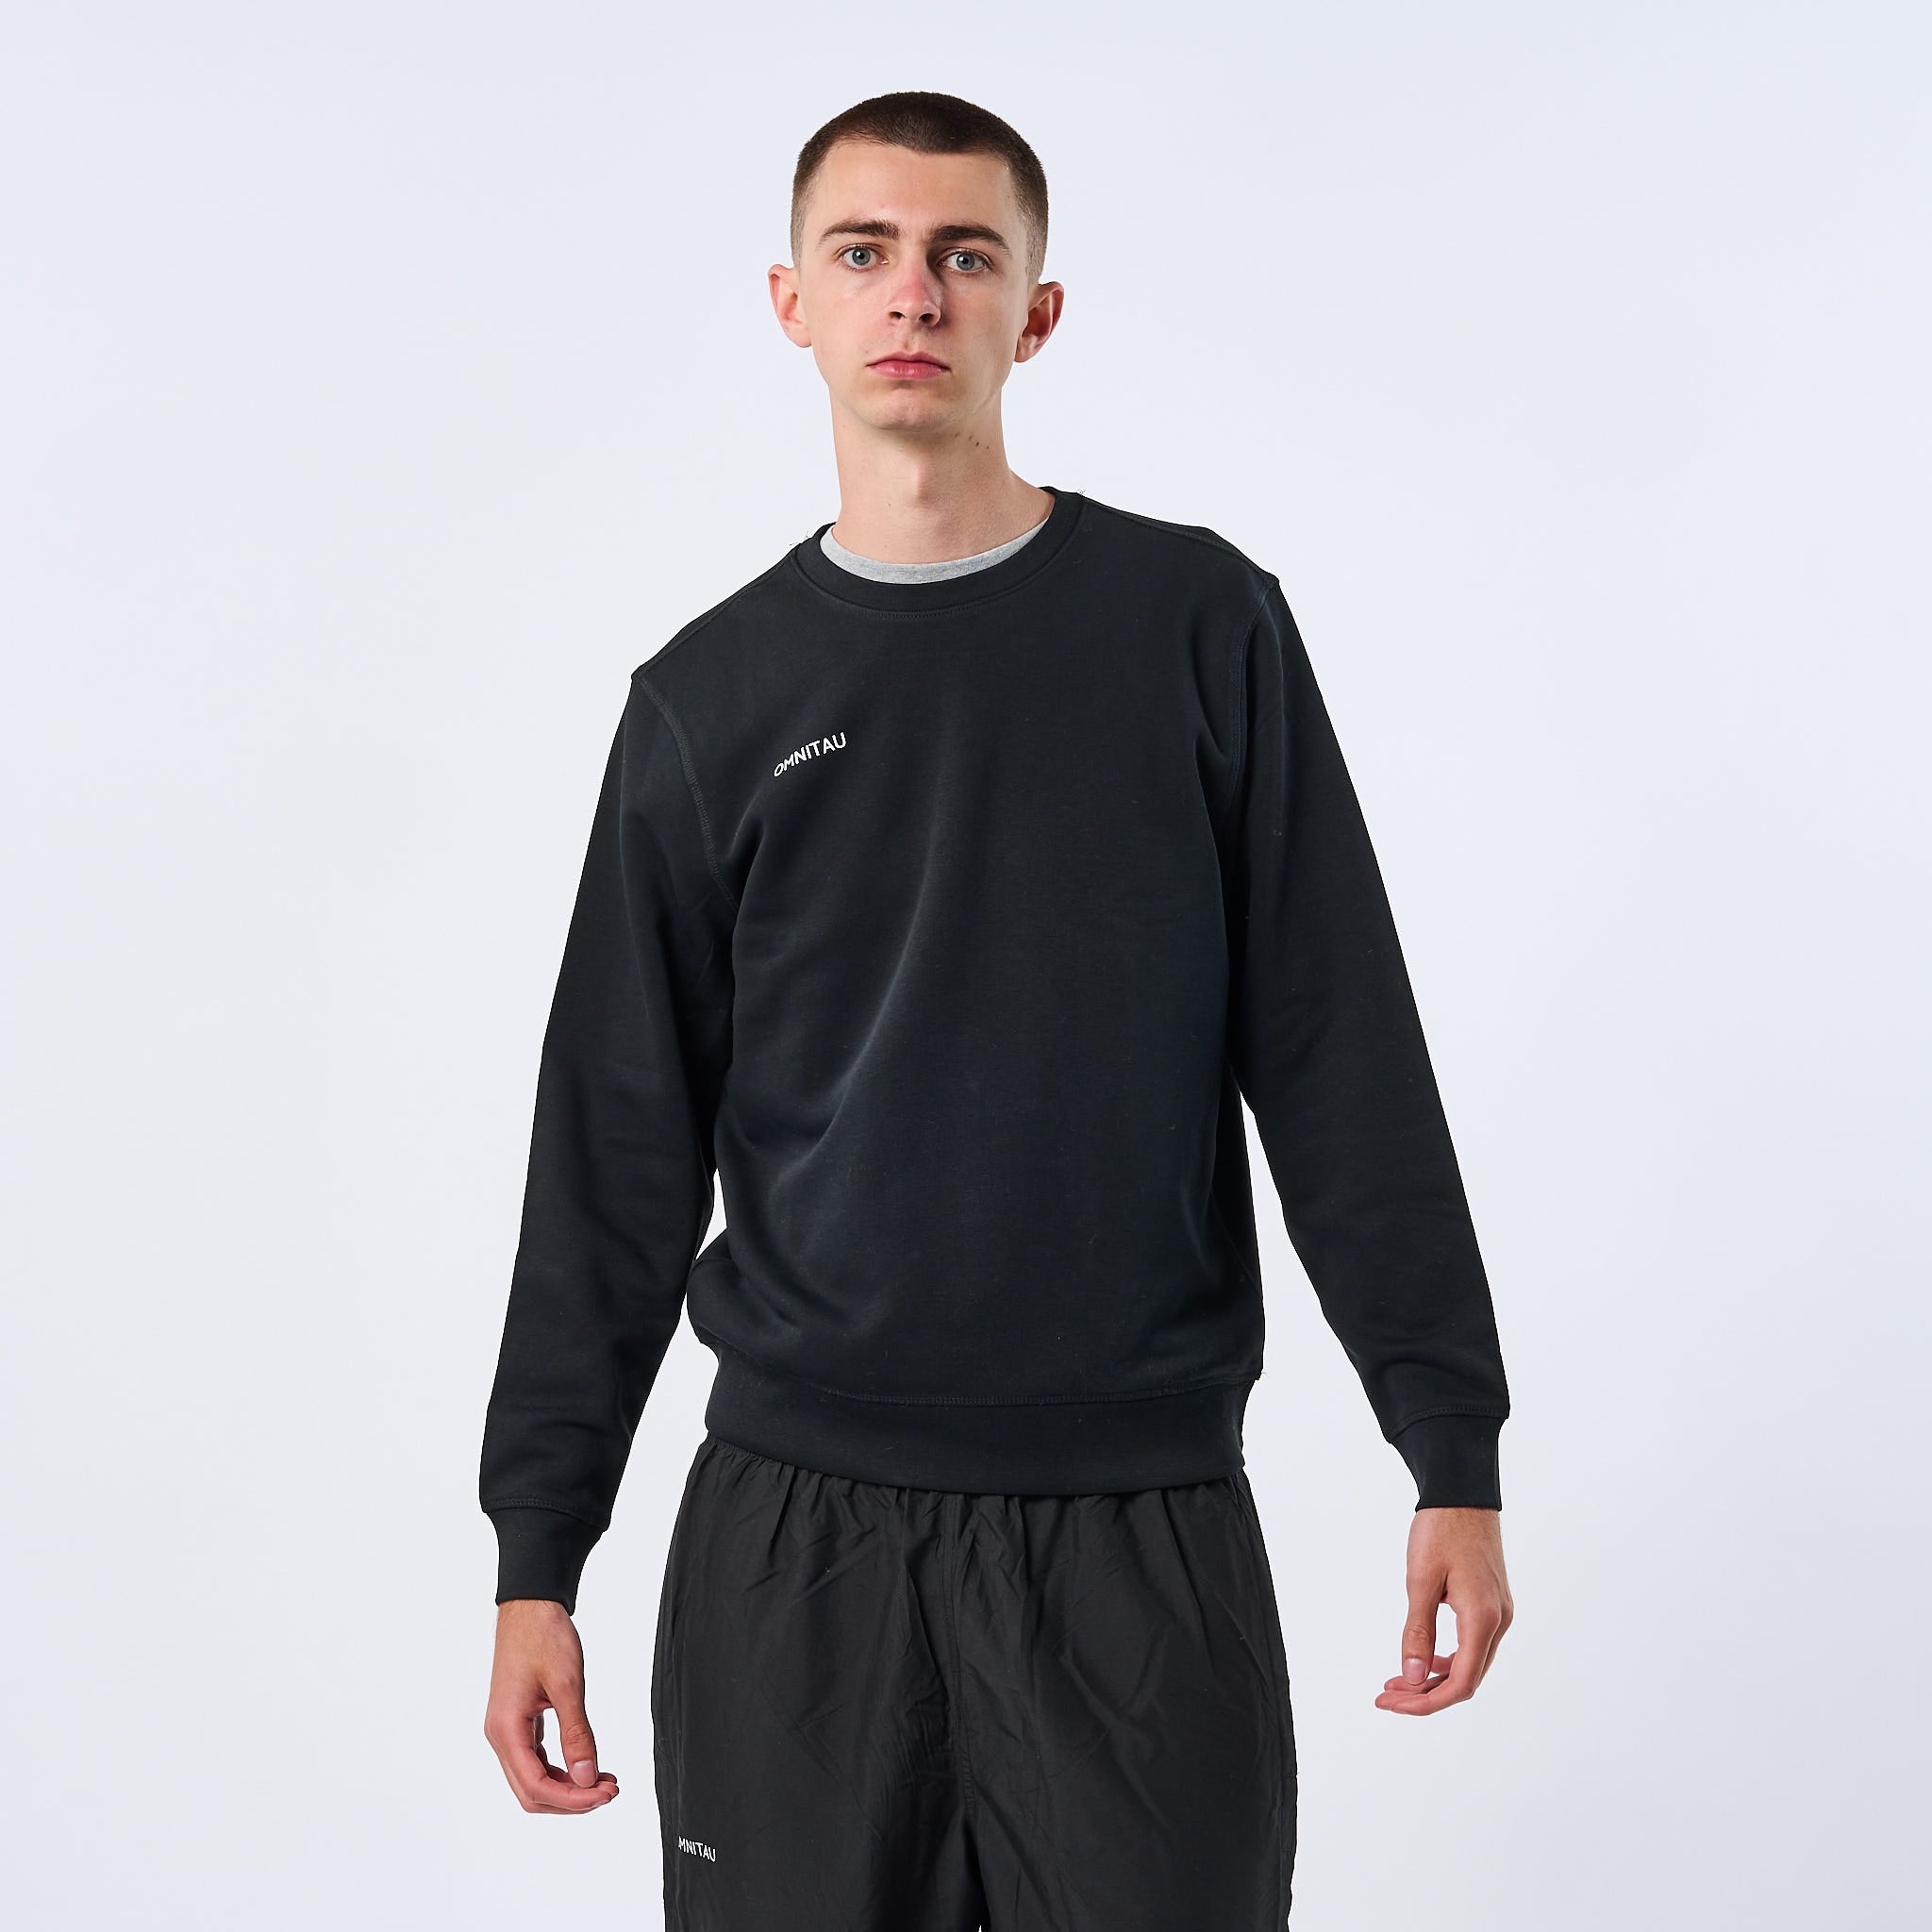 Omnitau Men's Team Sports Organic Cotton Sweatshirt - Black